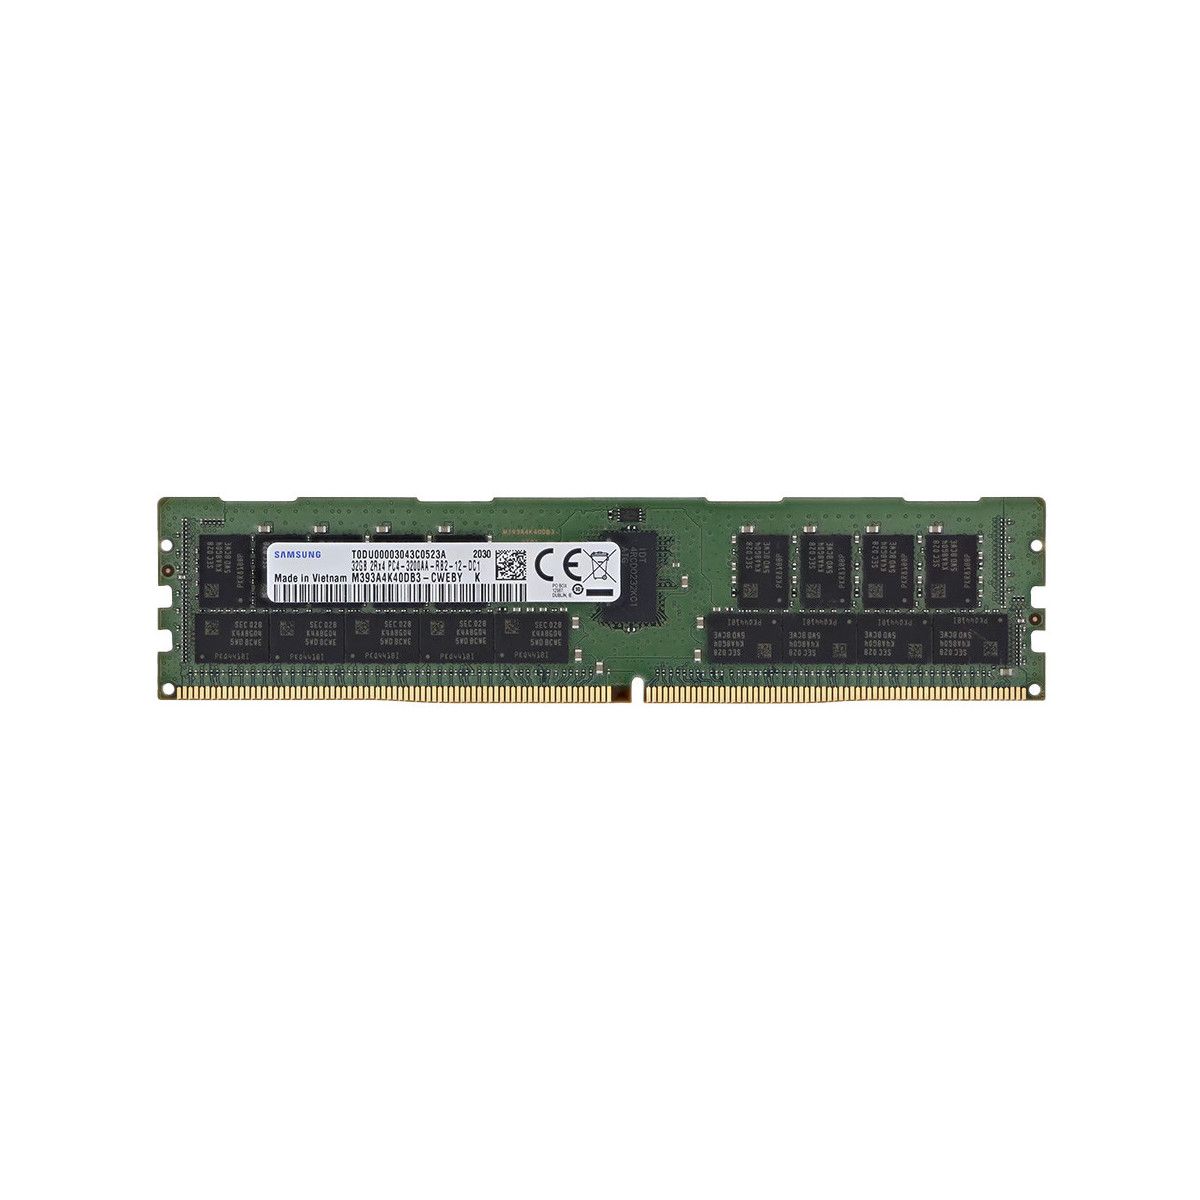 P06033‐B21-MS - Memstar 1x 32GB DDR4-3200 RDIMM PC4-25600R - Mem-star Memorie OEM compatibilă 1 - Memstar 